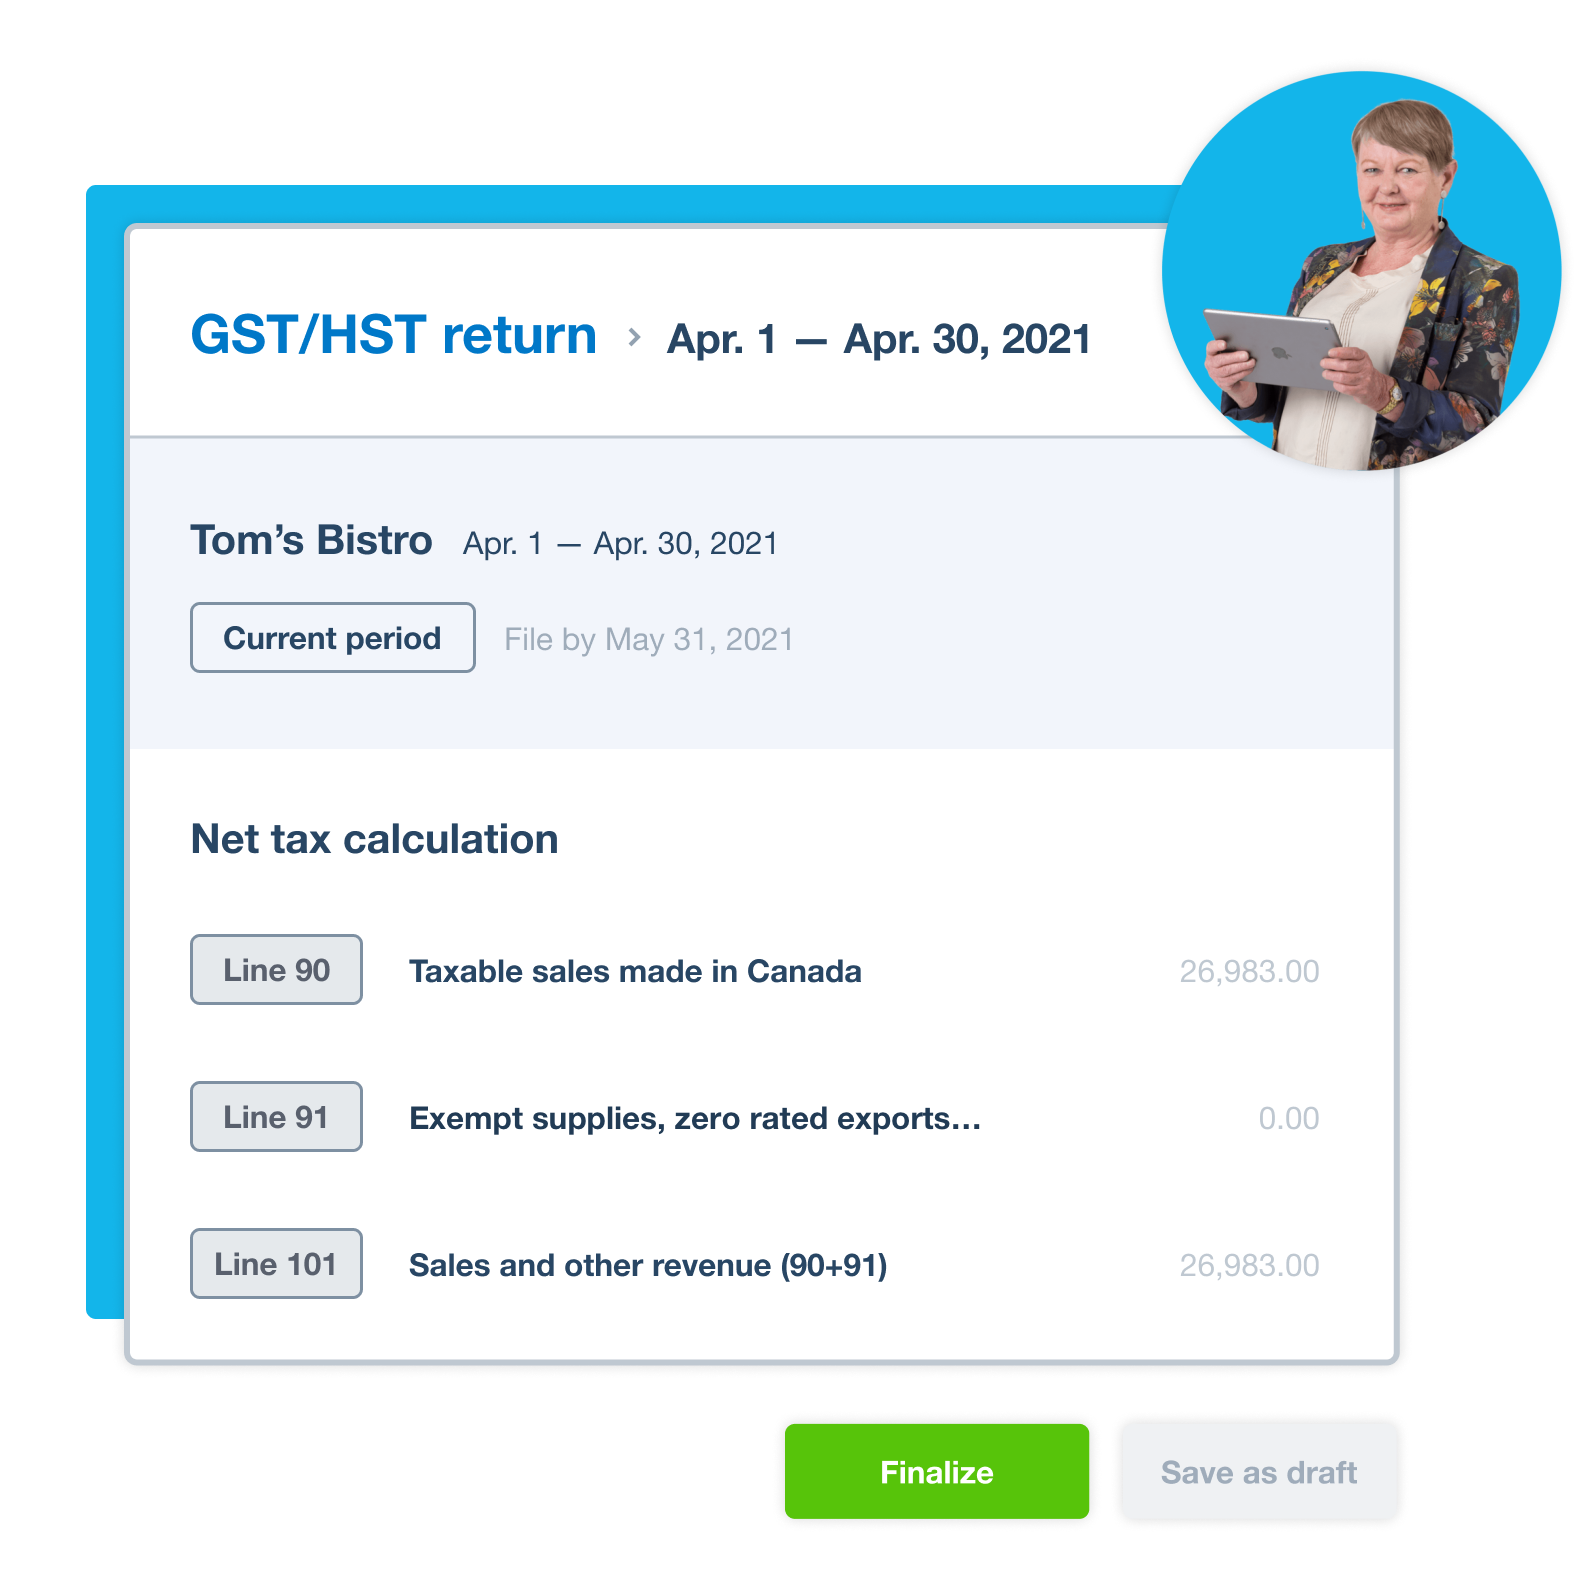  Summary of GST/HST online filing return for Tom’s Bistro. 